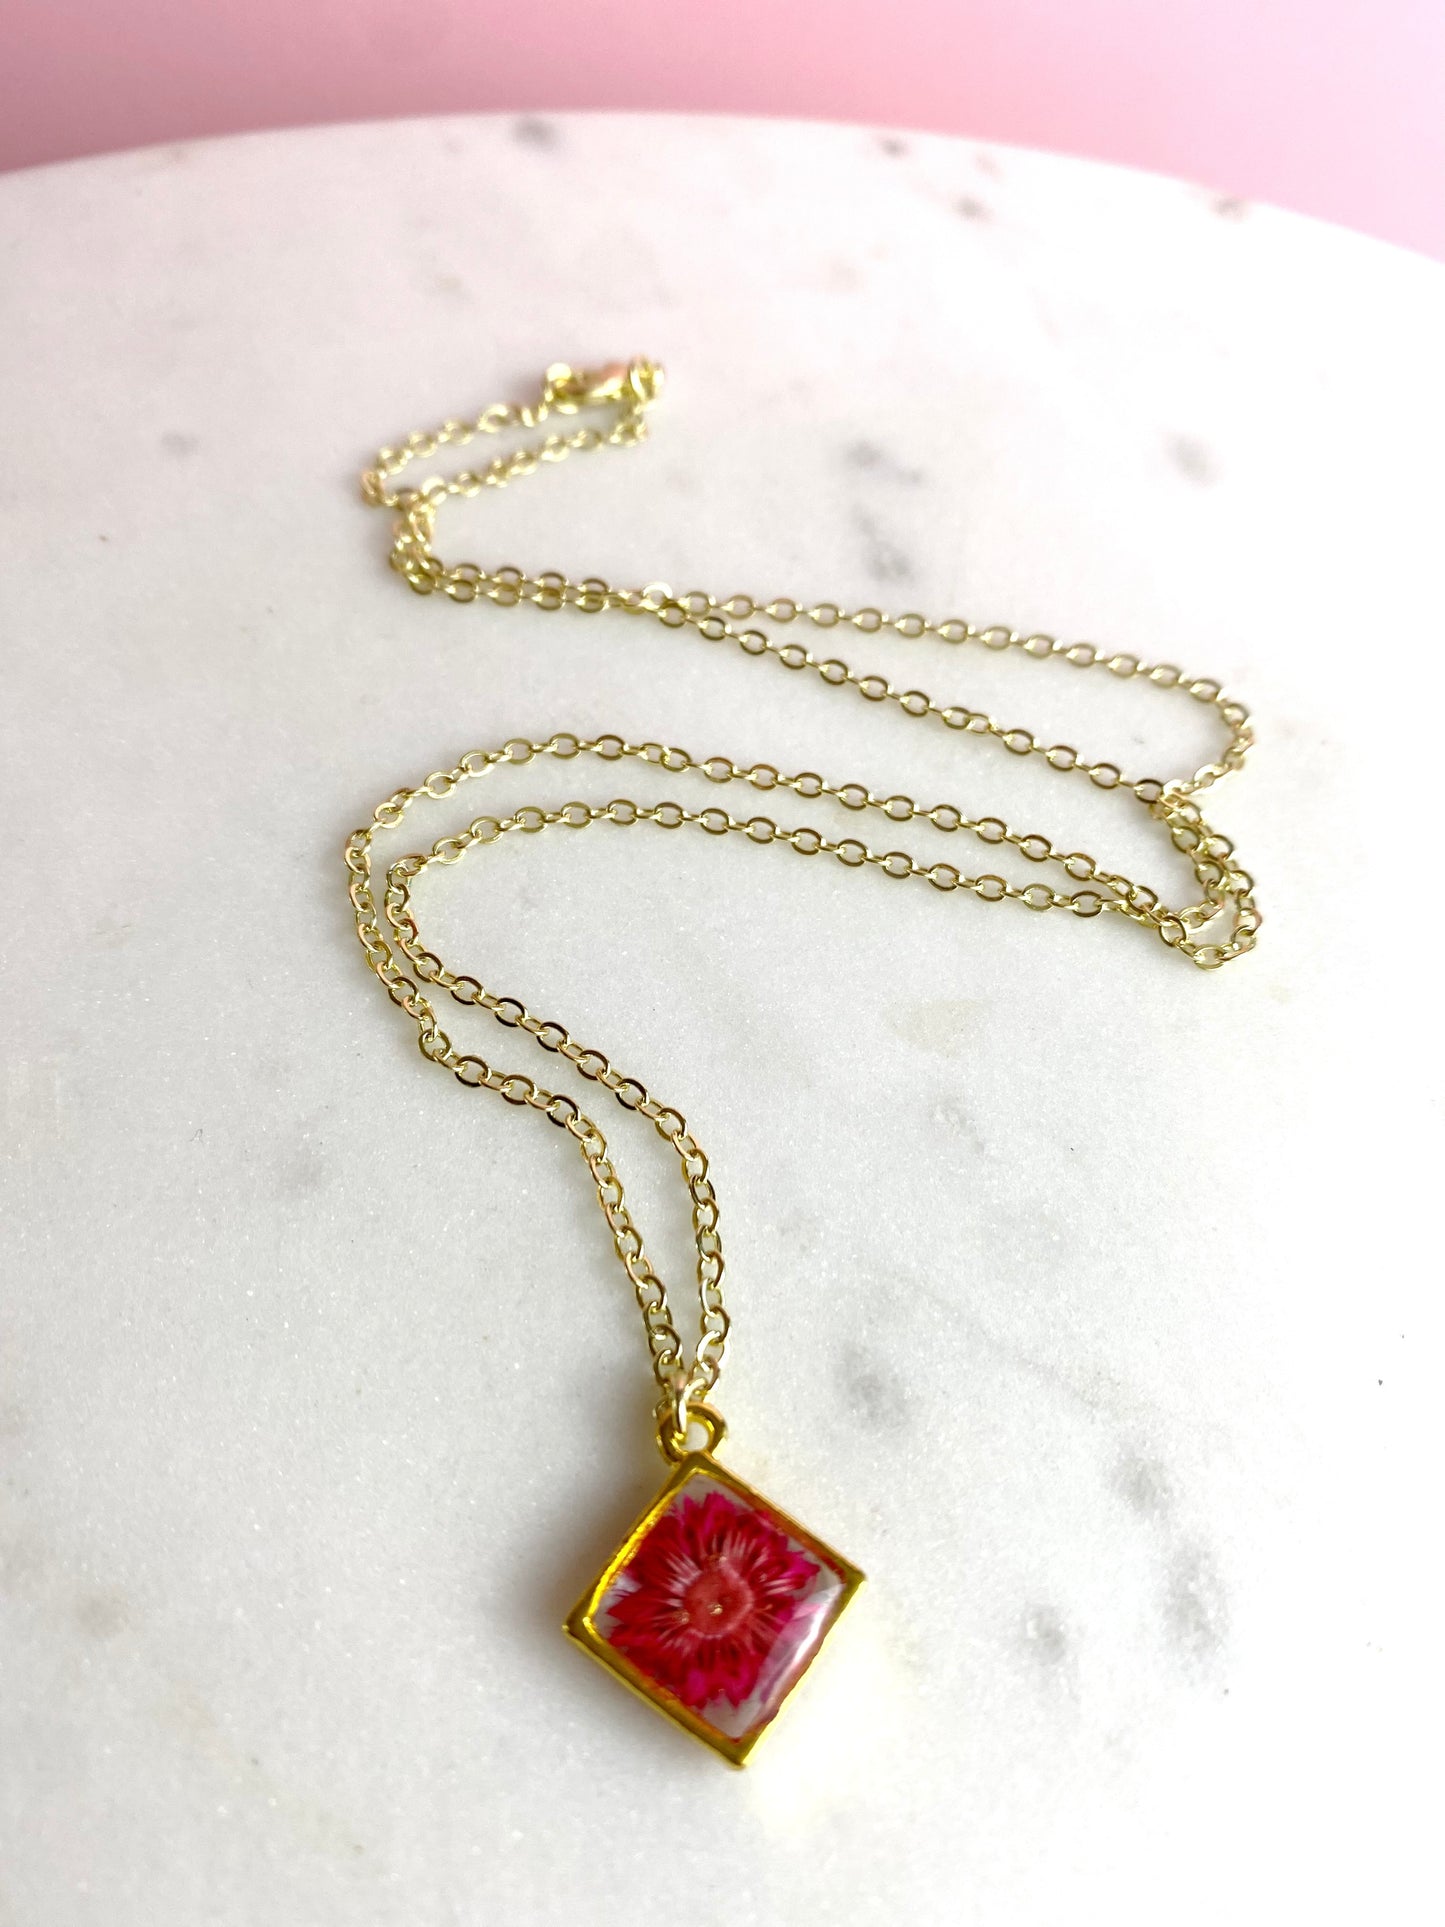 Pressed Flower Necklace | Hot Pink Daisy Diamond | Handmade Jewelry